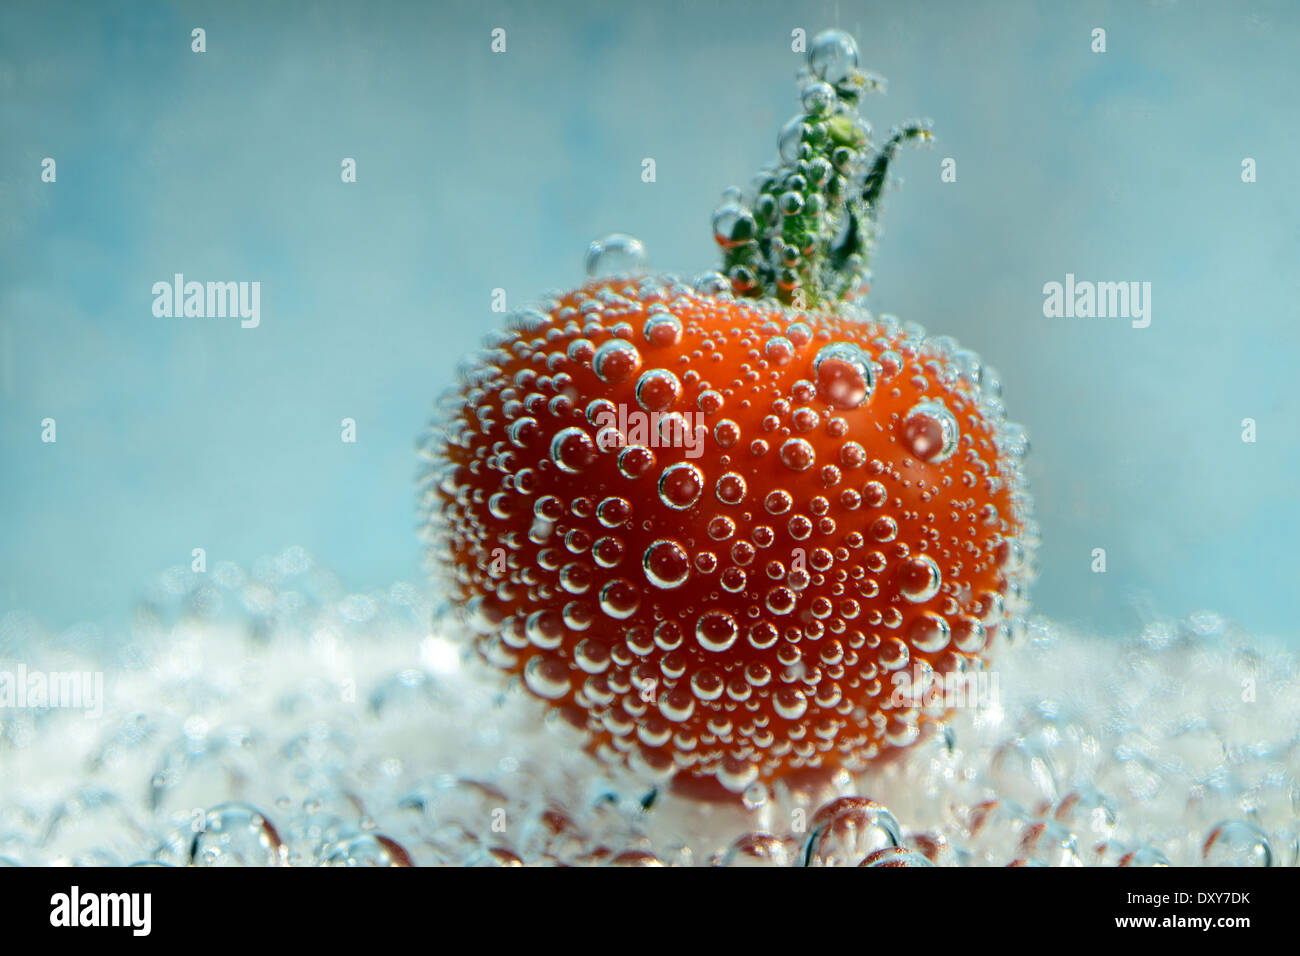 cherry tomato with bubbles underwater Stock Photo